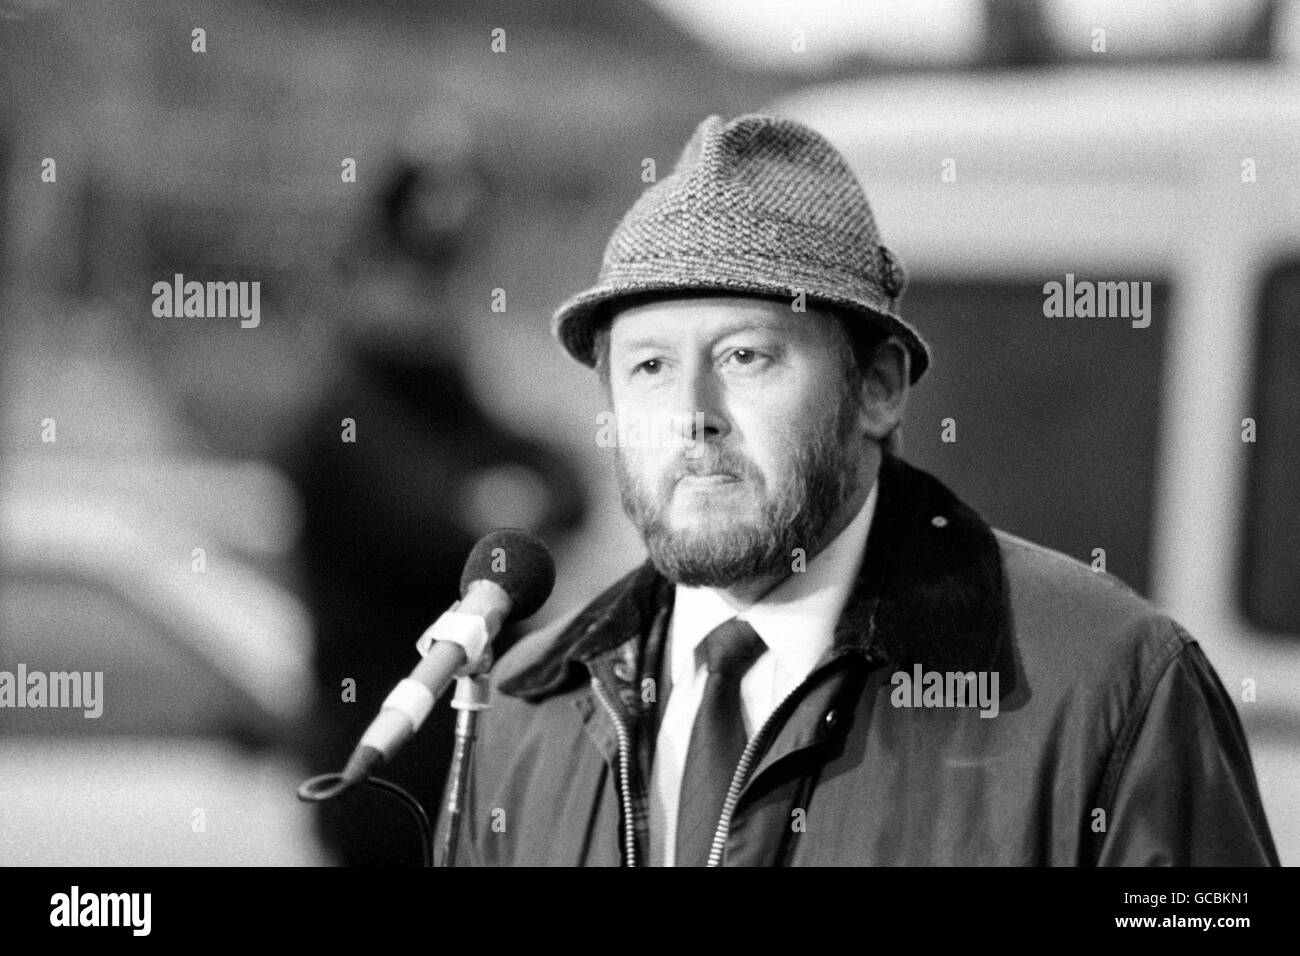 Crime - Strangeways Prison Riot - Manchester. Ian Lockwood, Senior Governor of Prison Services speaking outside Strangeways Prison. Stock Photo